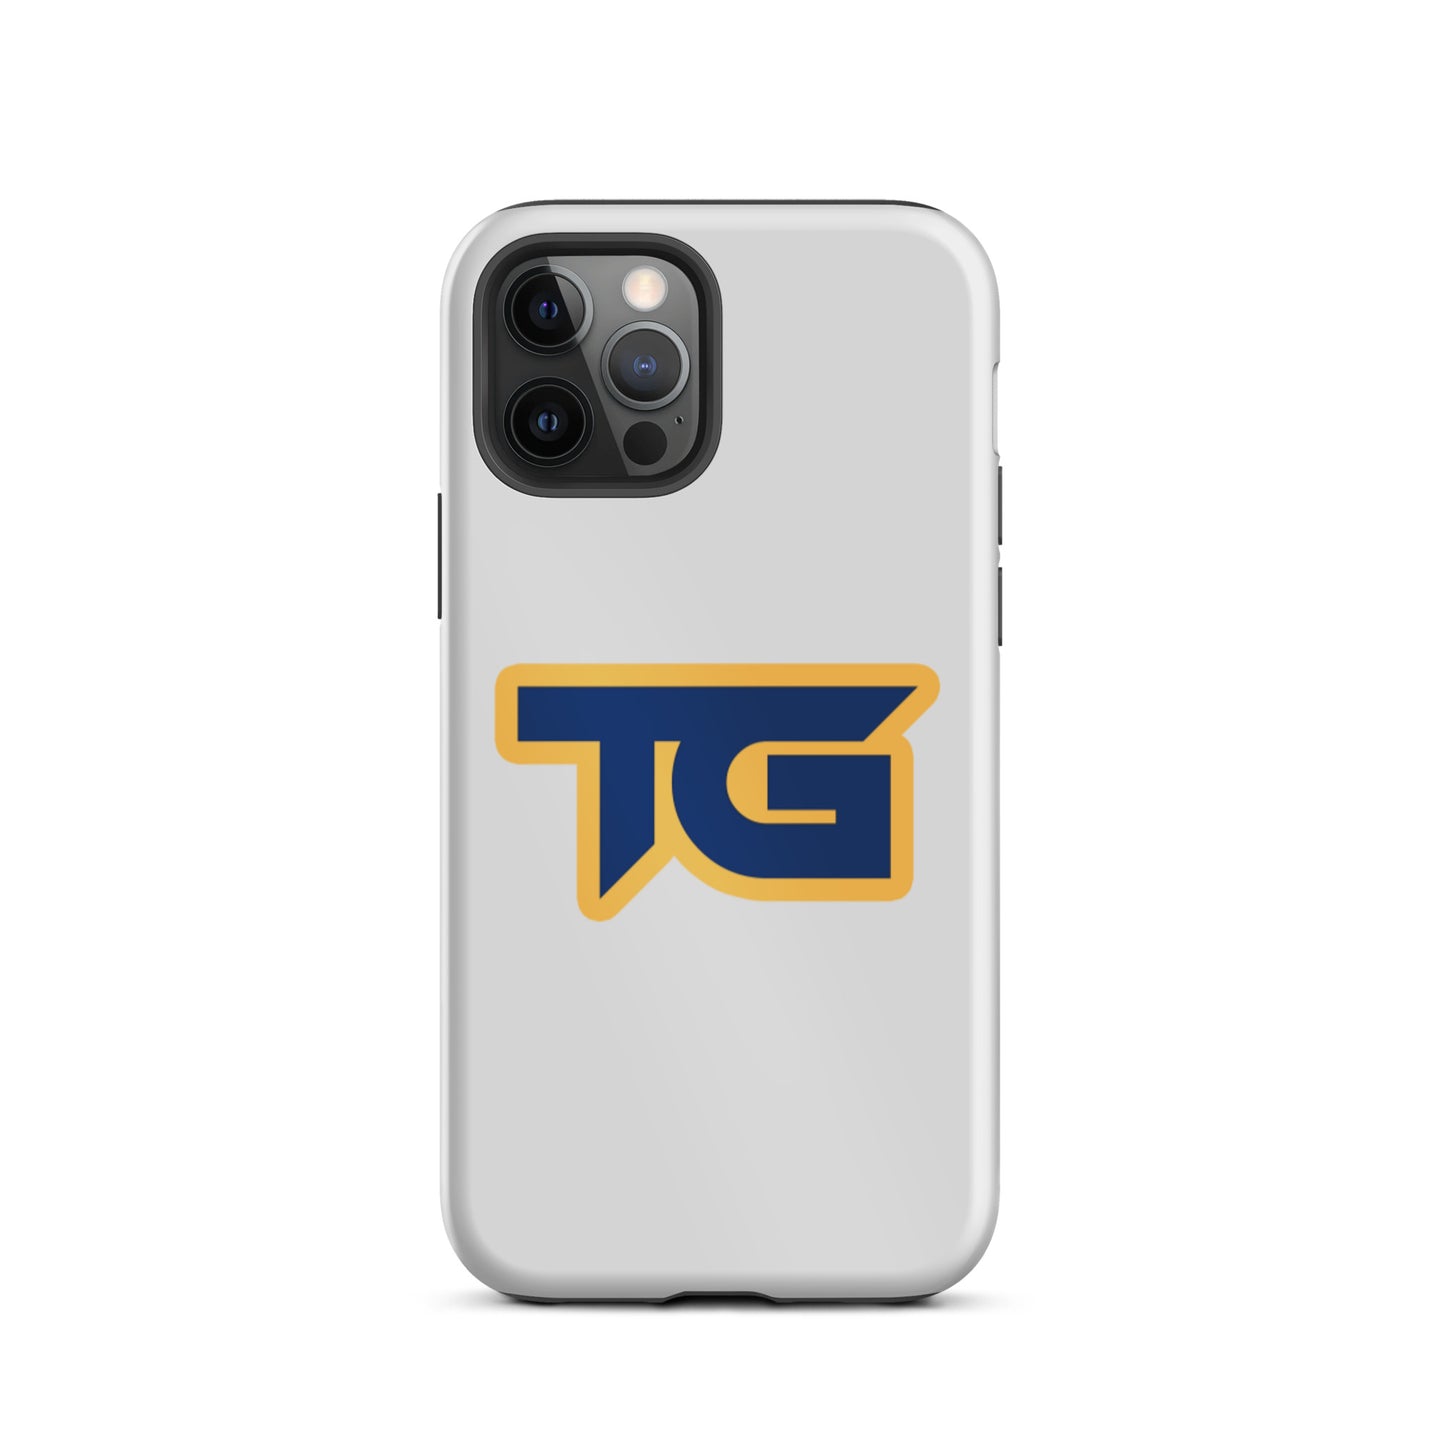 TG Tough iPhone case